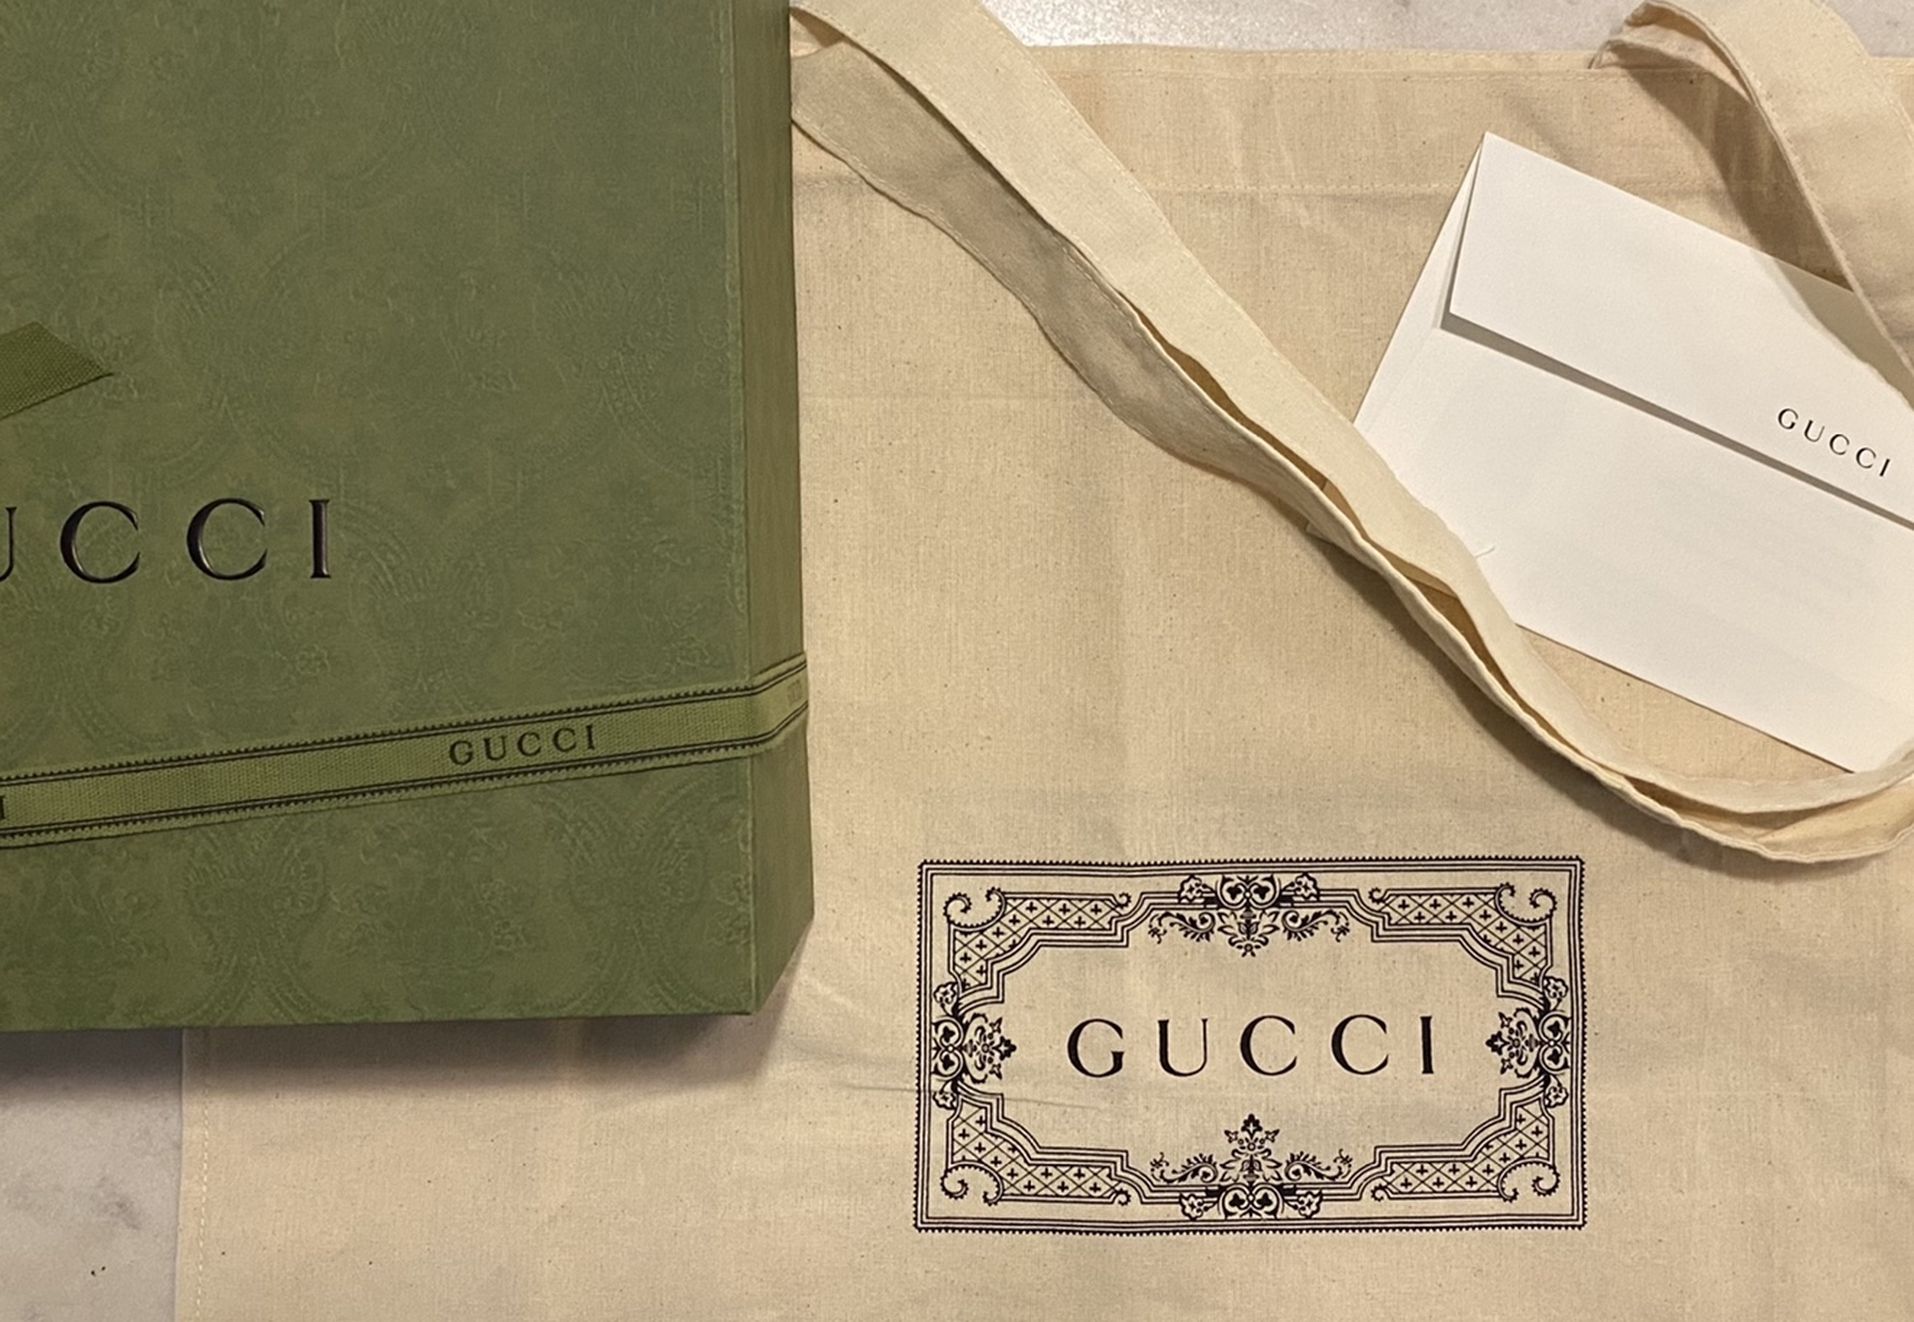 Authentic Gucci Canvas Tote Bag Brand new